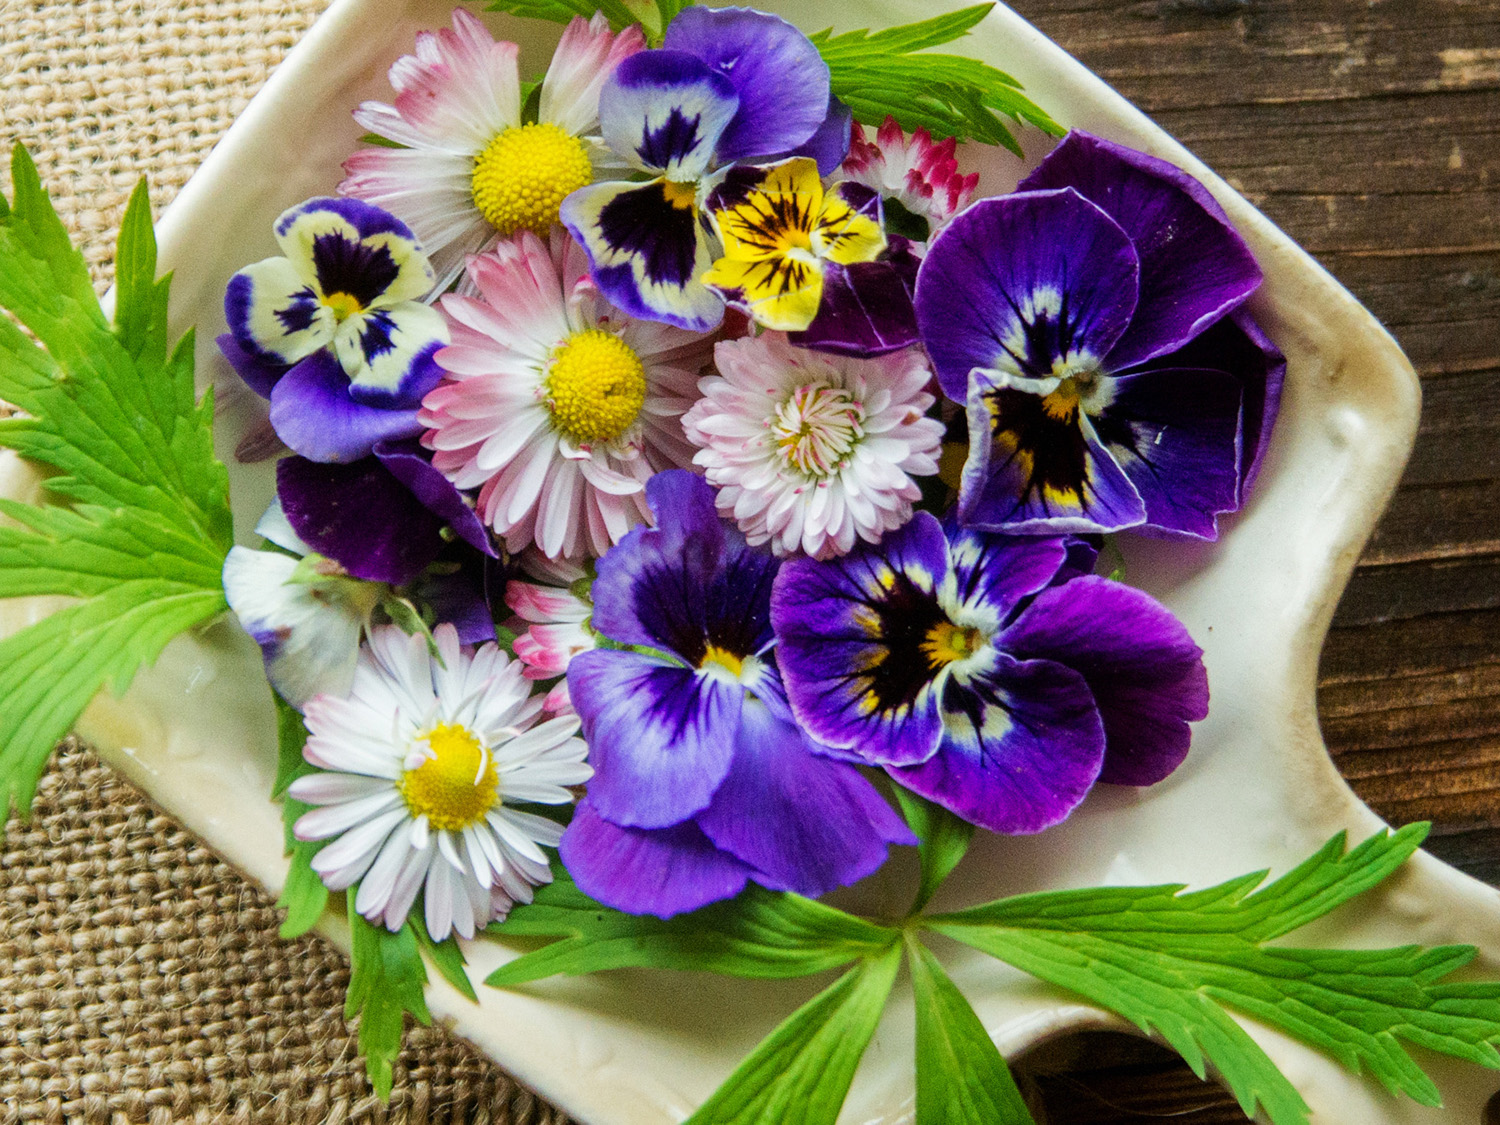 Plate full of edible flowers